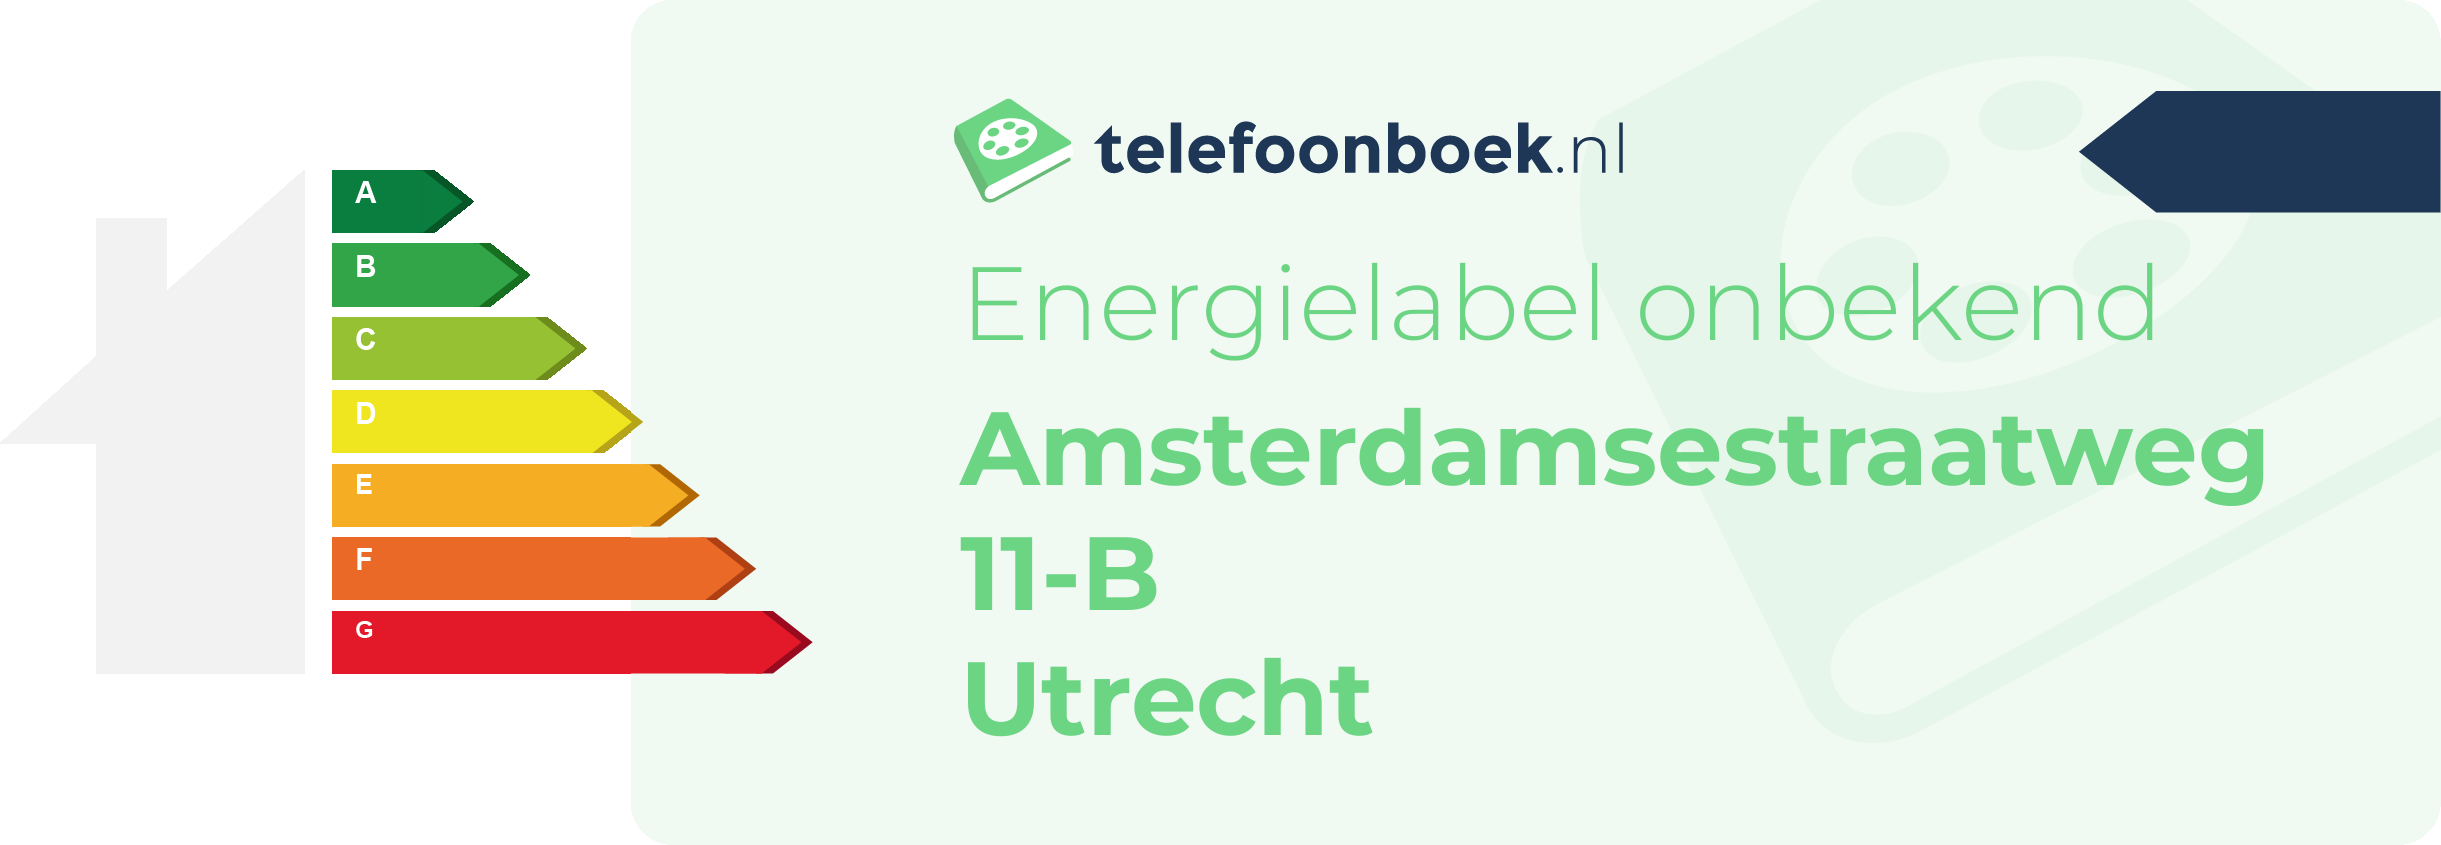 Energielabel Amsterdamsestraatweg 11-B Utrecht